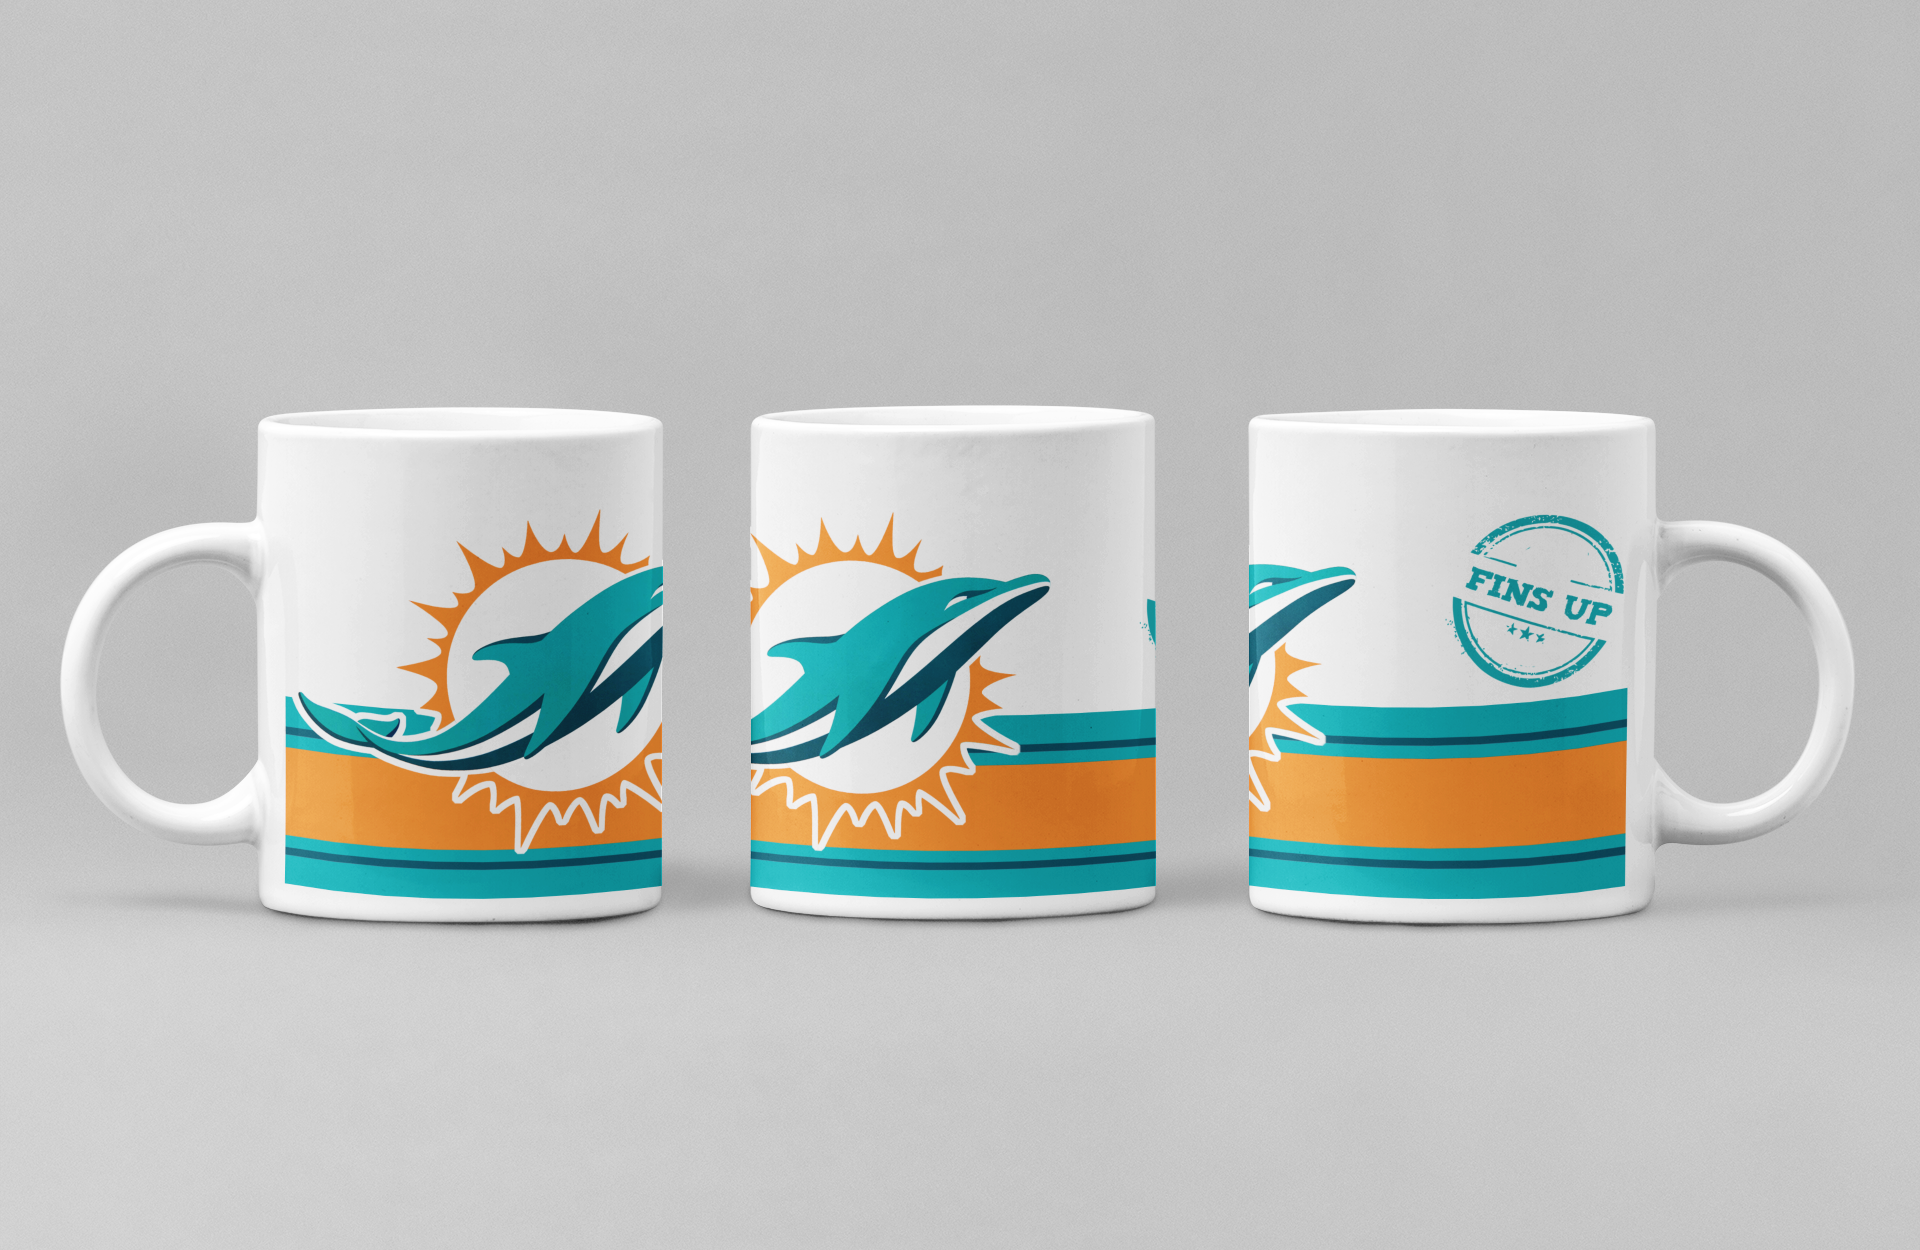 NFL Miami Dolphins Personalized Coffee Mug 11oz White